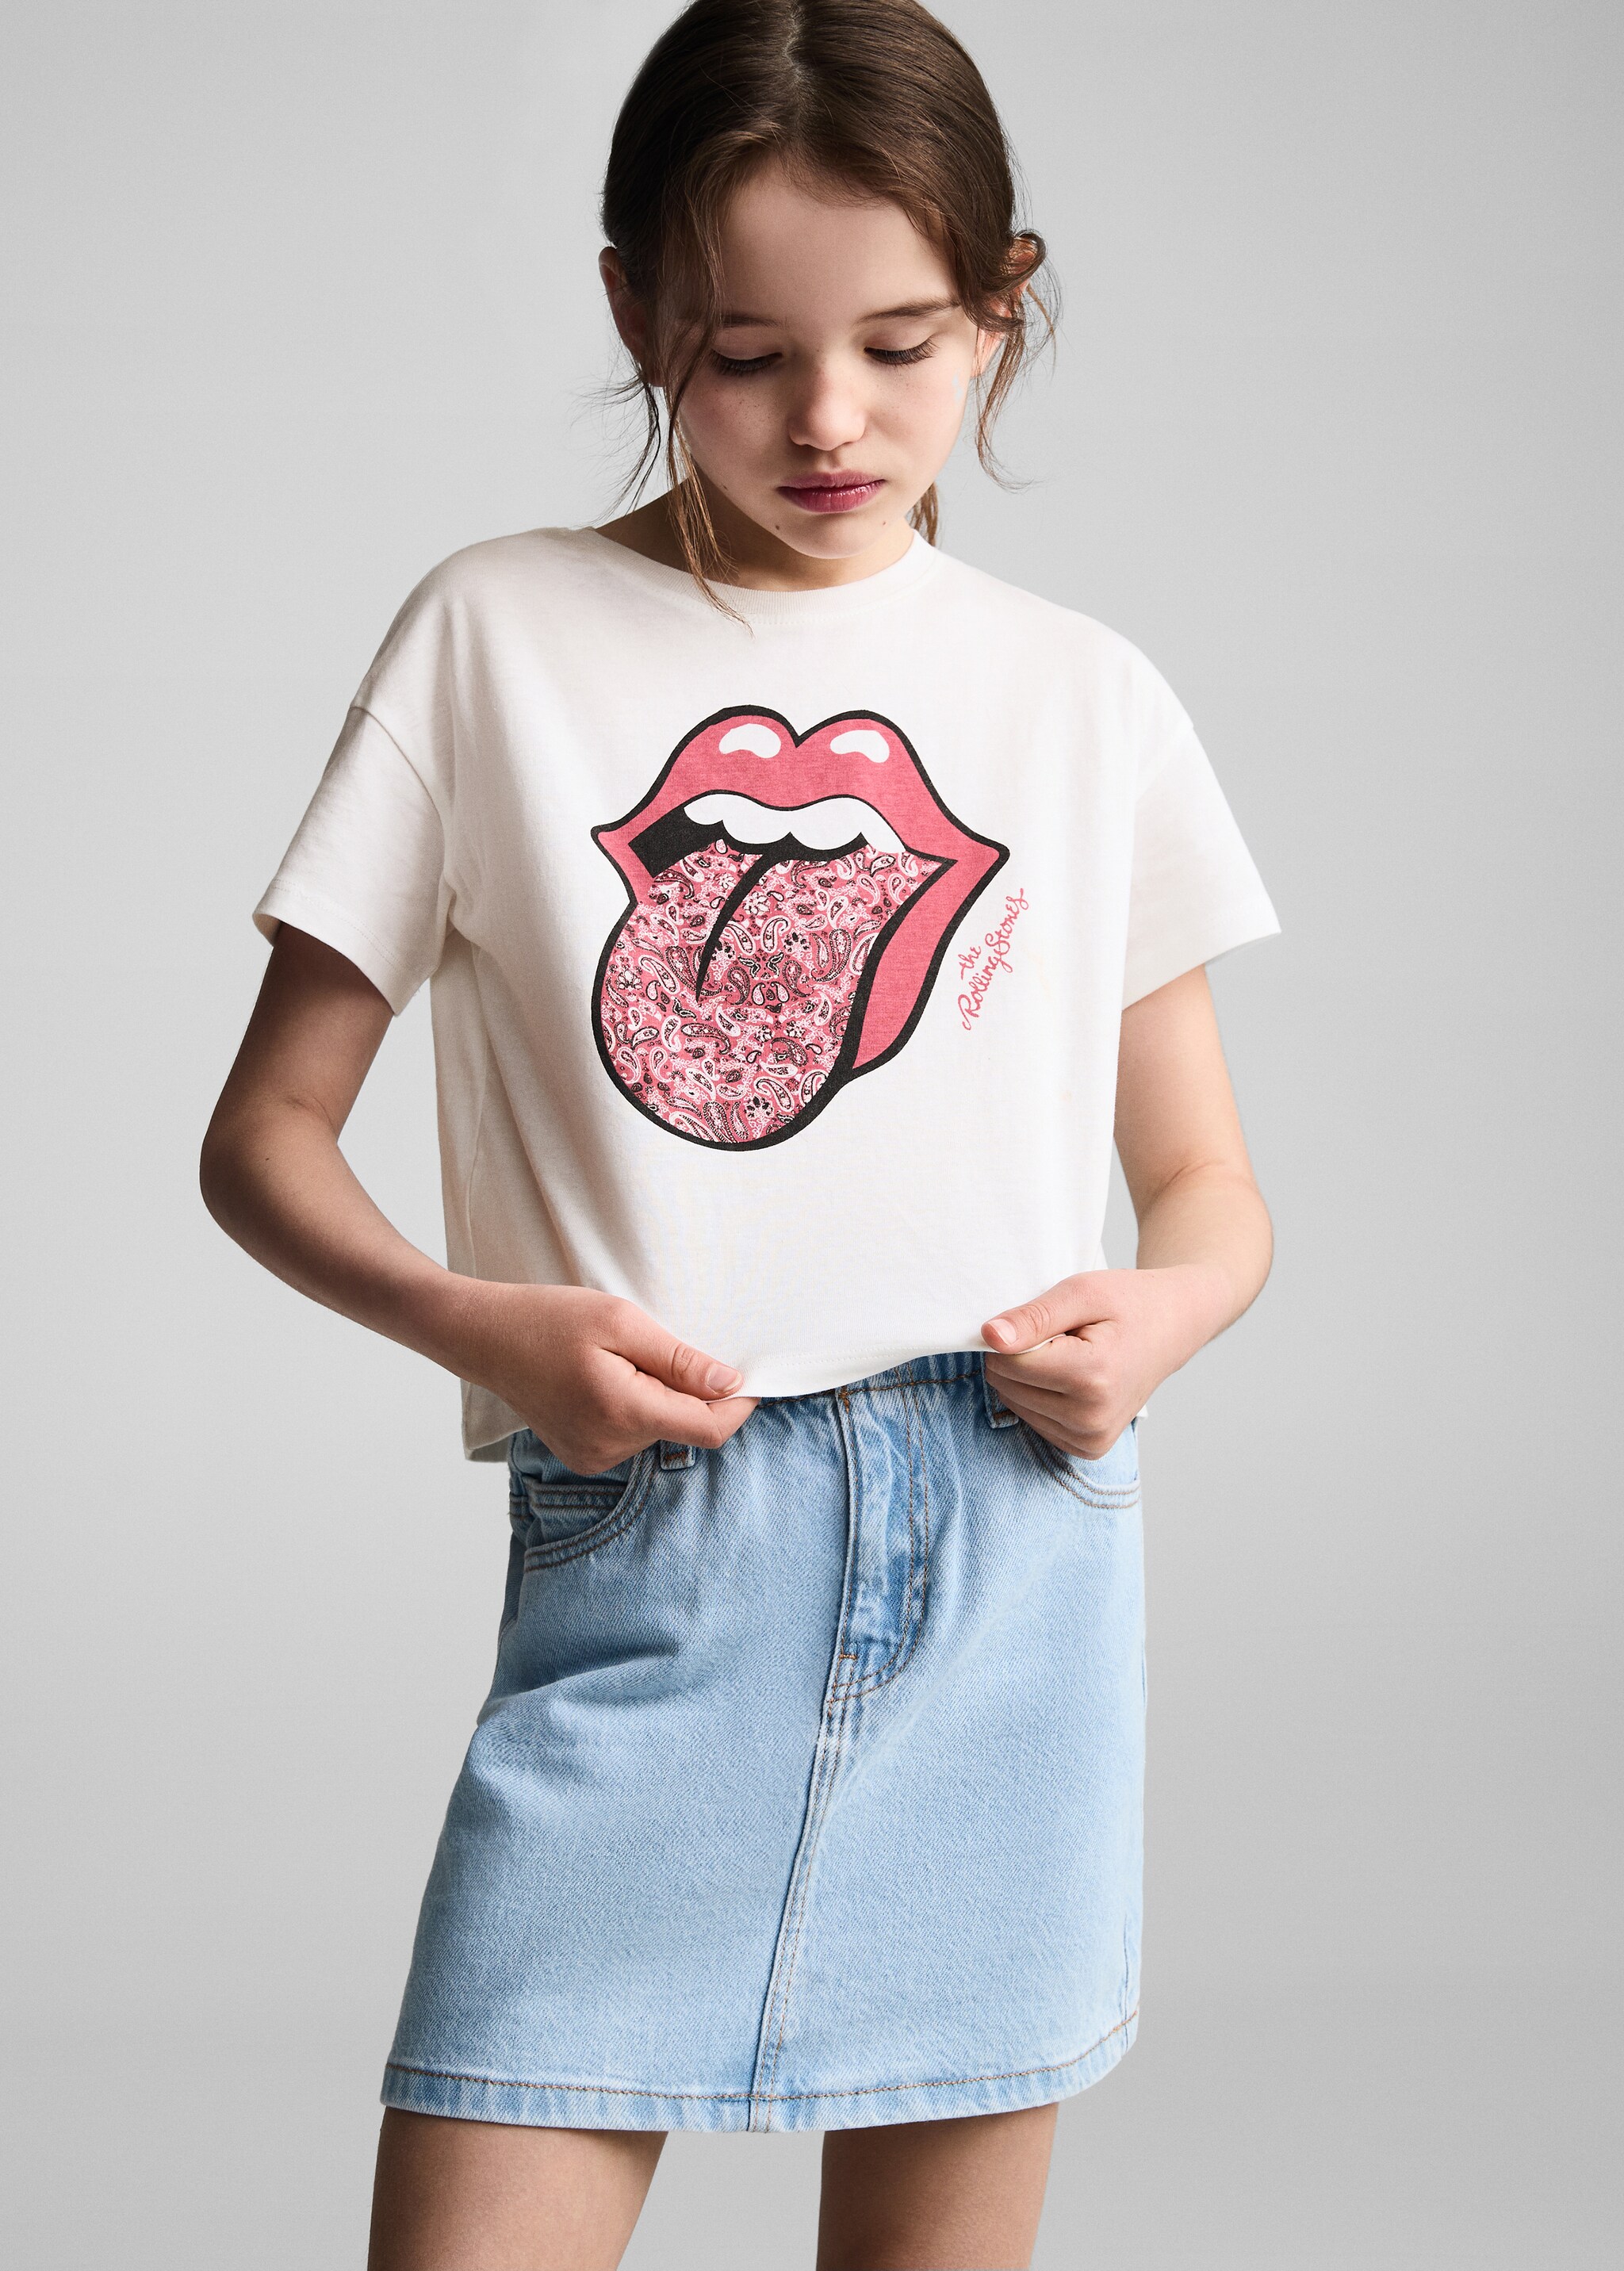 The Rolling Stones T-shirt - Medium plane